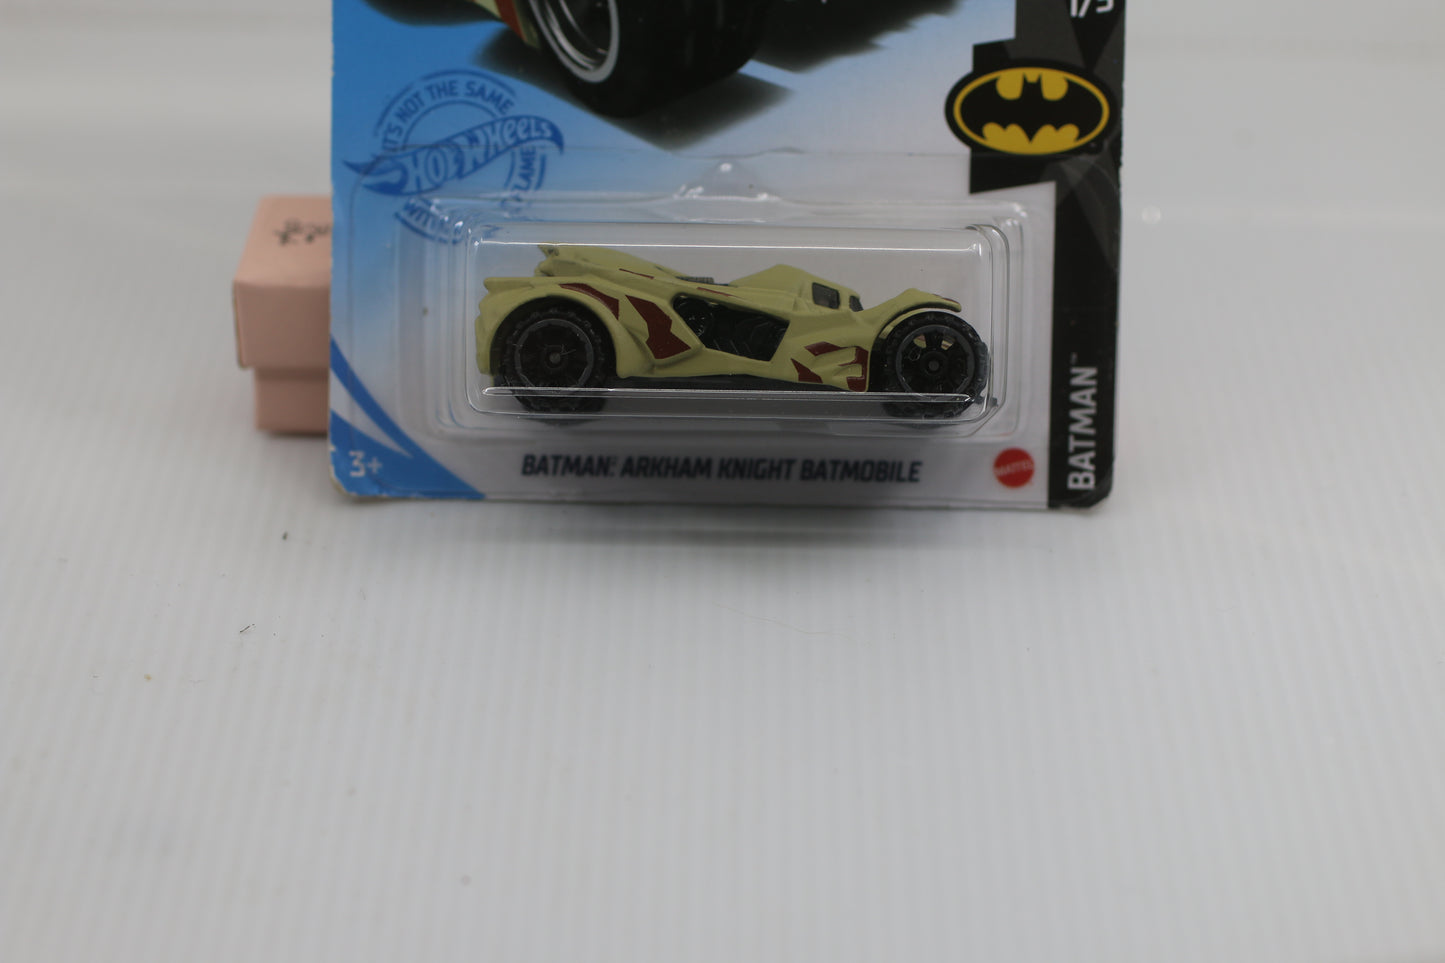 Hot Wheels - 2021 Batman 1/5 Batman: Arkham Knight Batmobile 8/250 (BBGTB54)